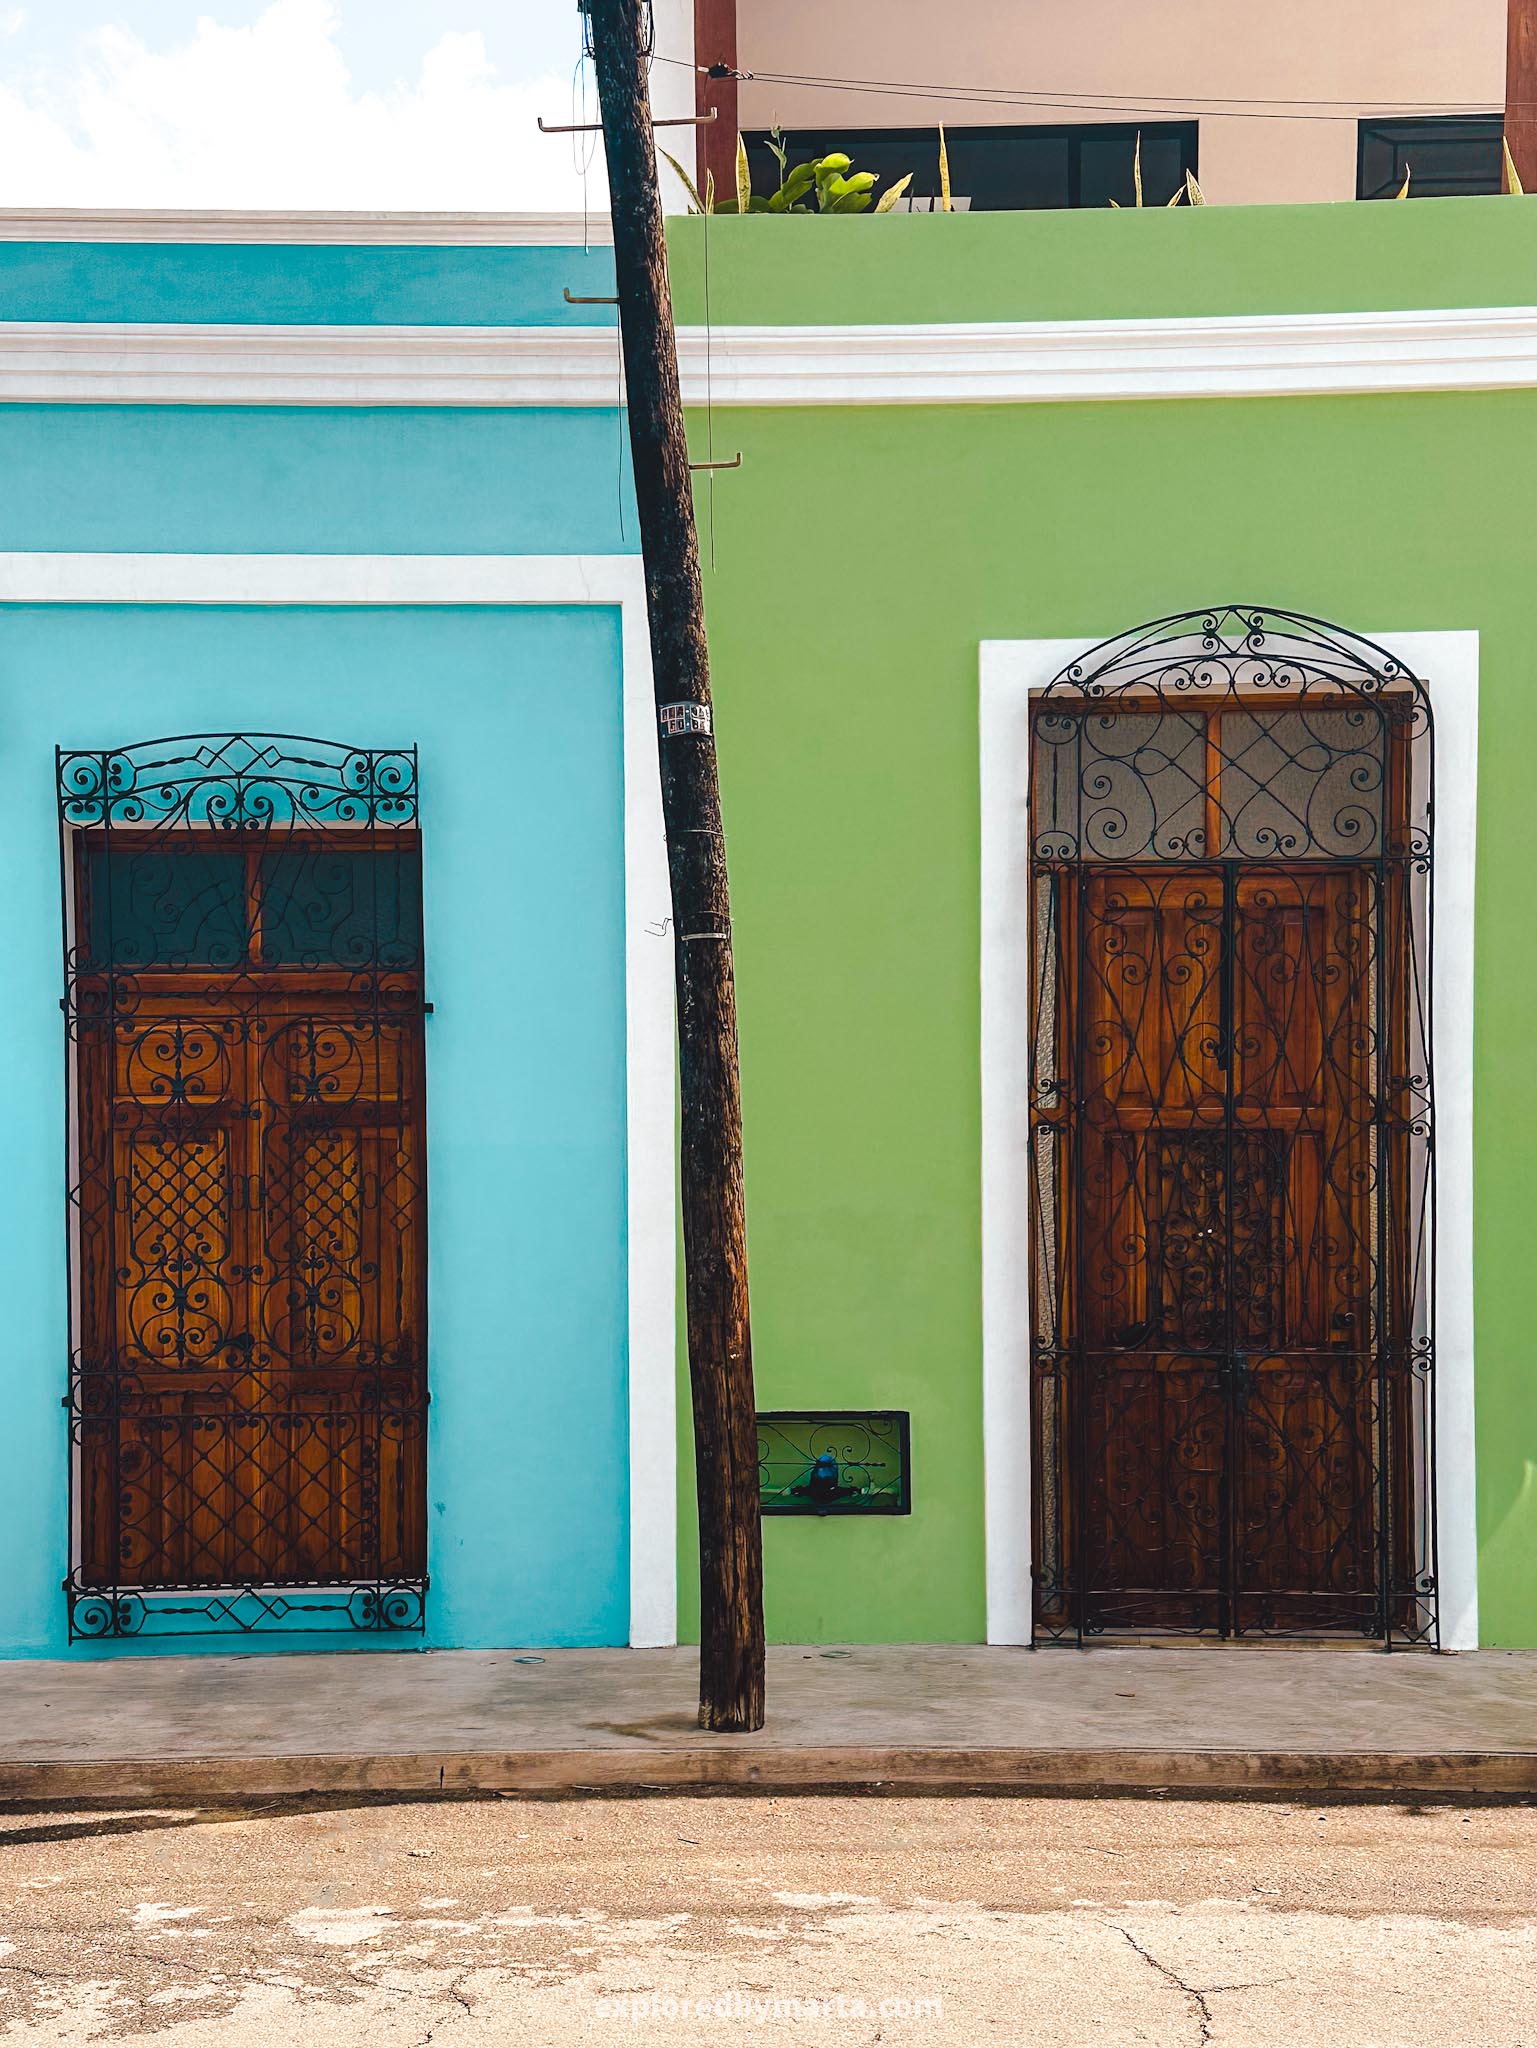 Merida, Mexico-best Instagram spots in Merida - colorful houses on Calle 64 street